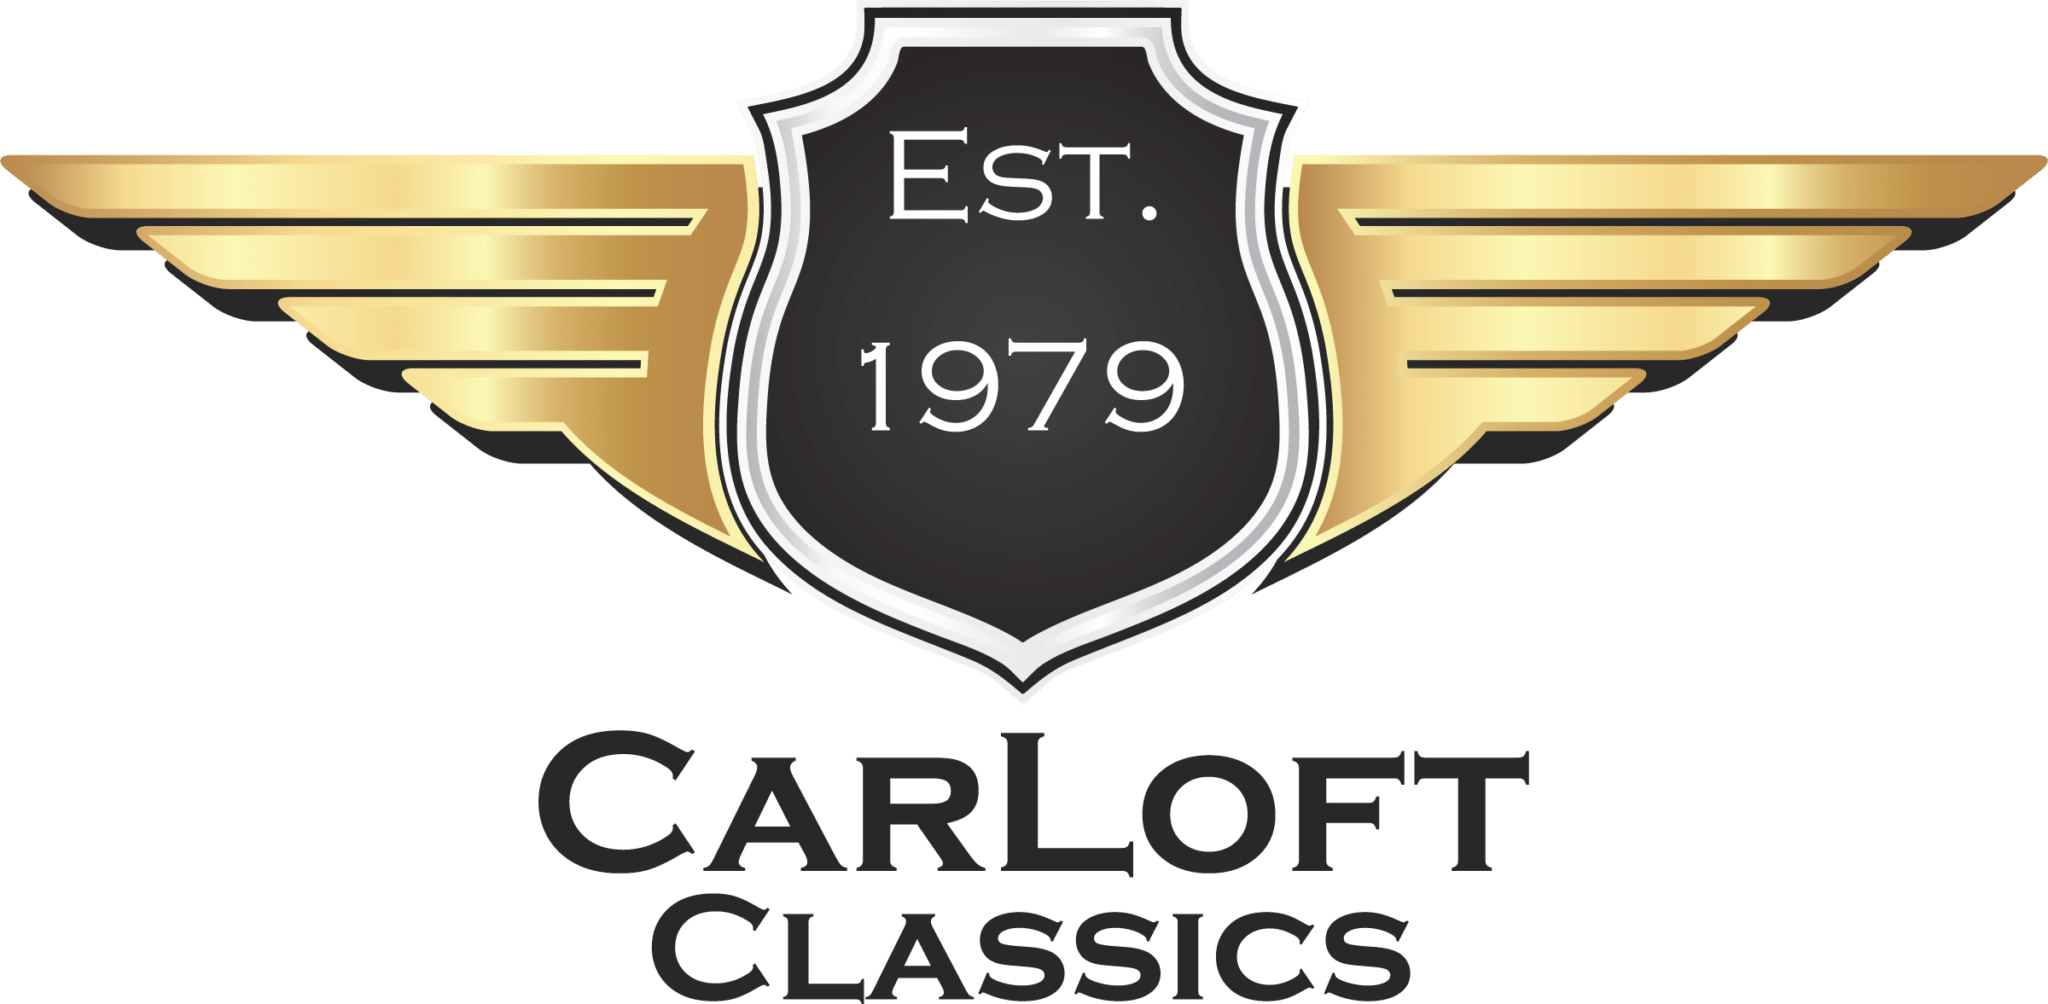 More info about CarloftClassics